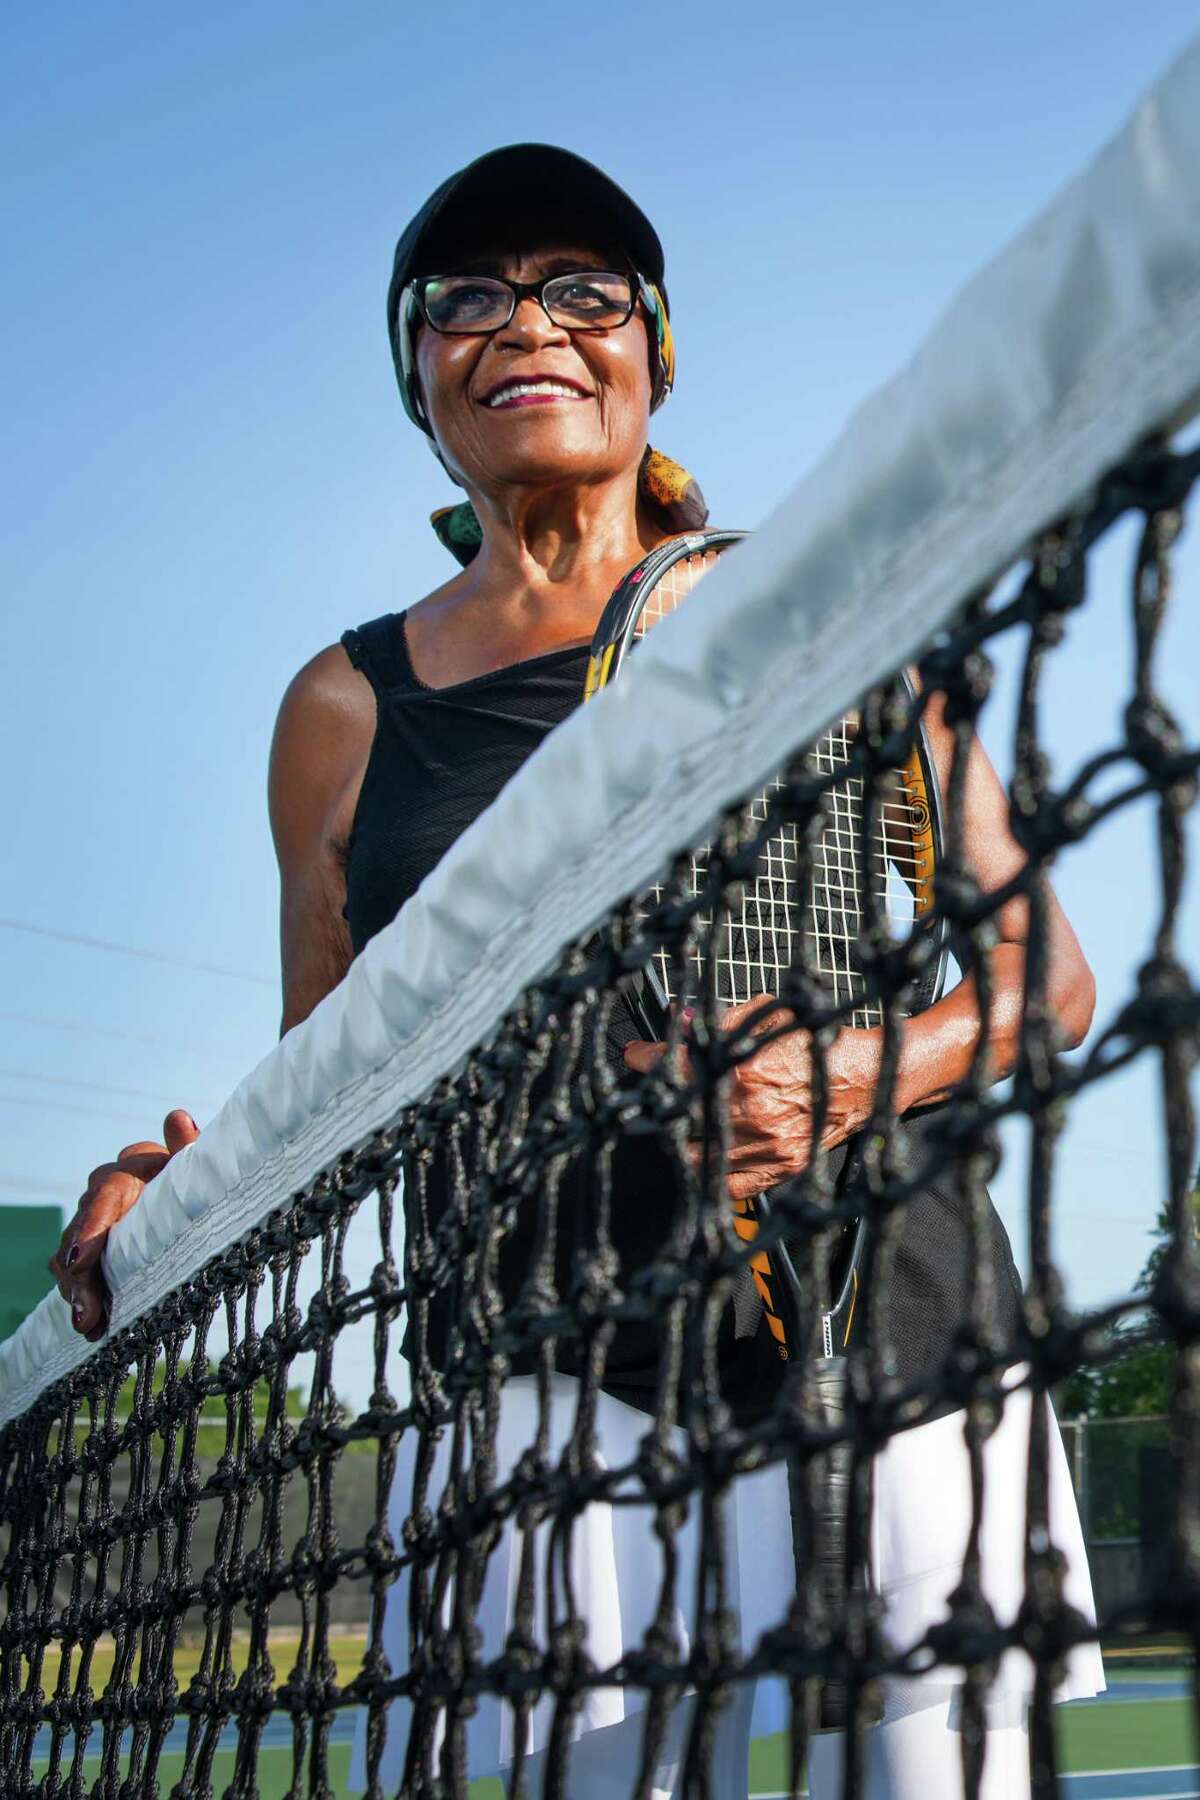 Venola Jolley 于 2022 年 6 月 20 日星期一在休斯顿的 Cunningham Creek 娱乐中心的网球场上摆姿势拍照。